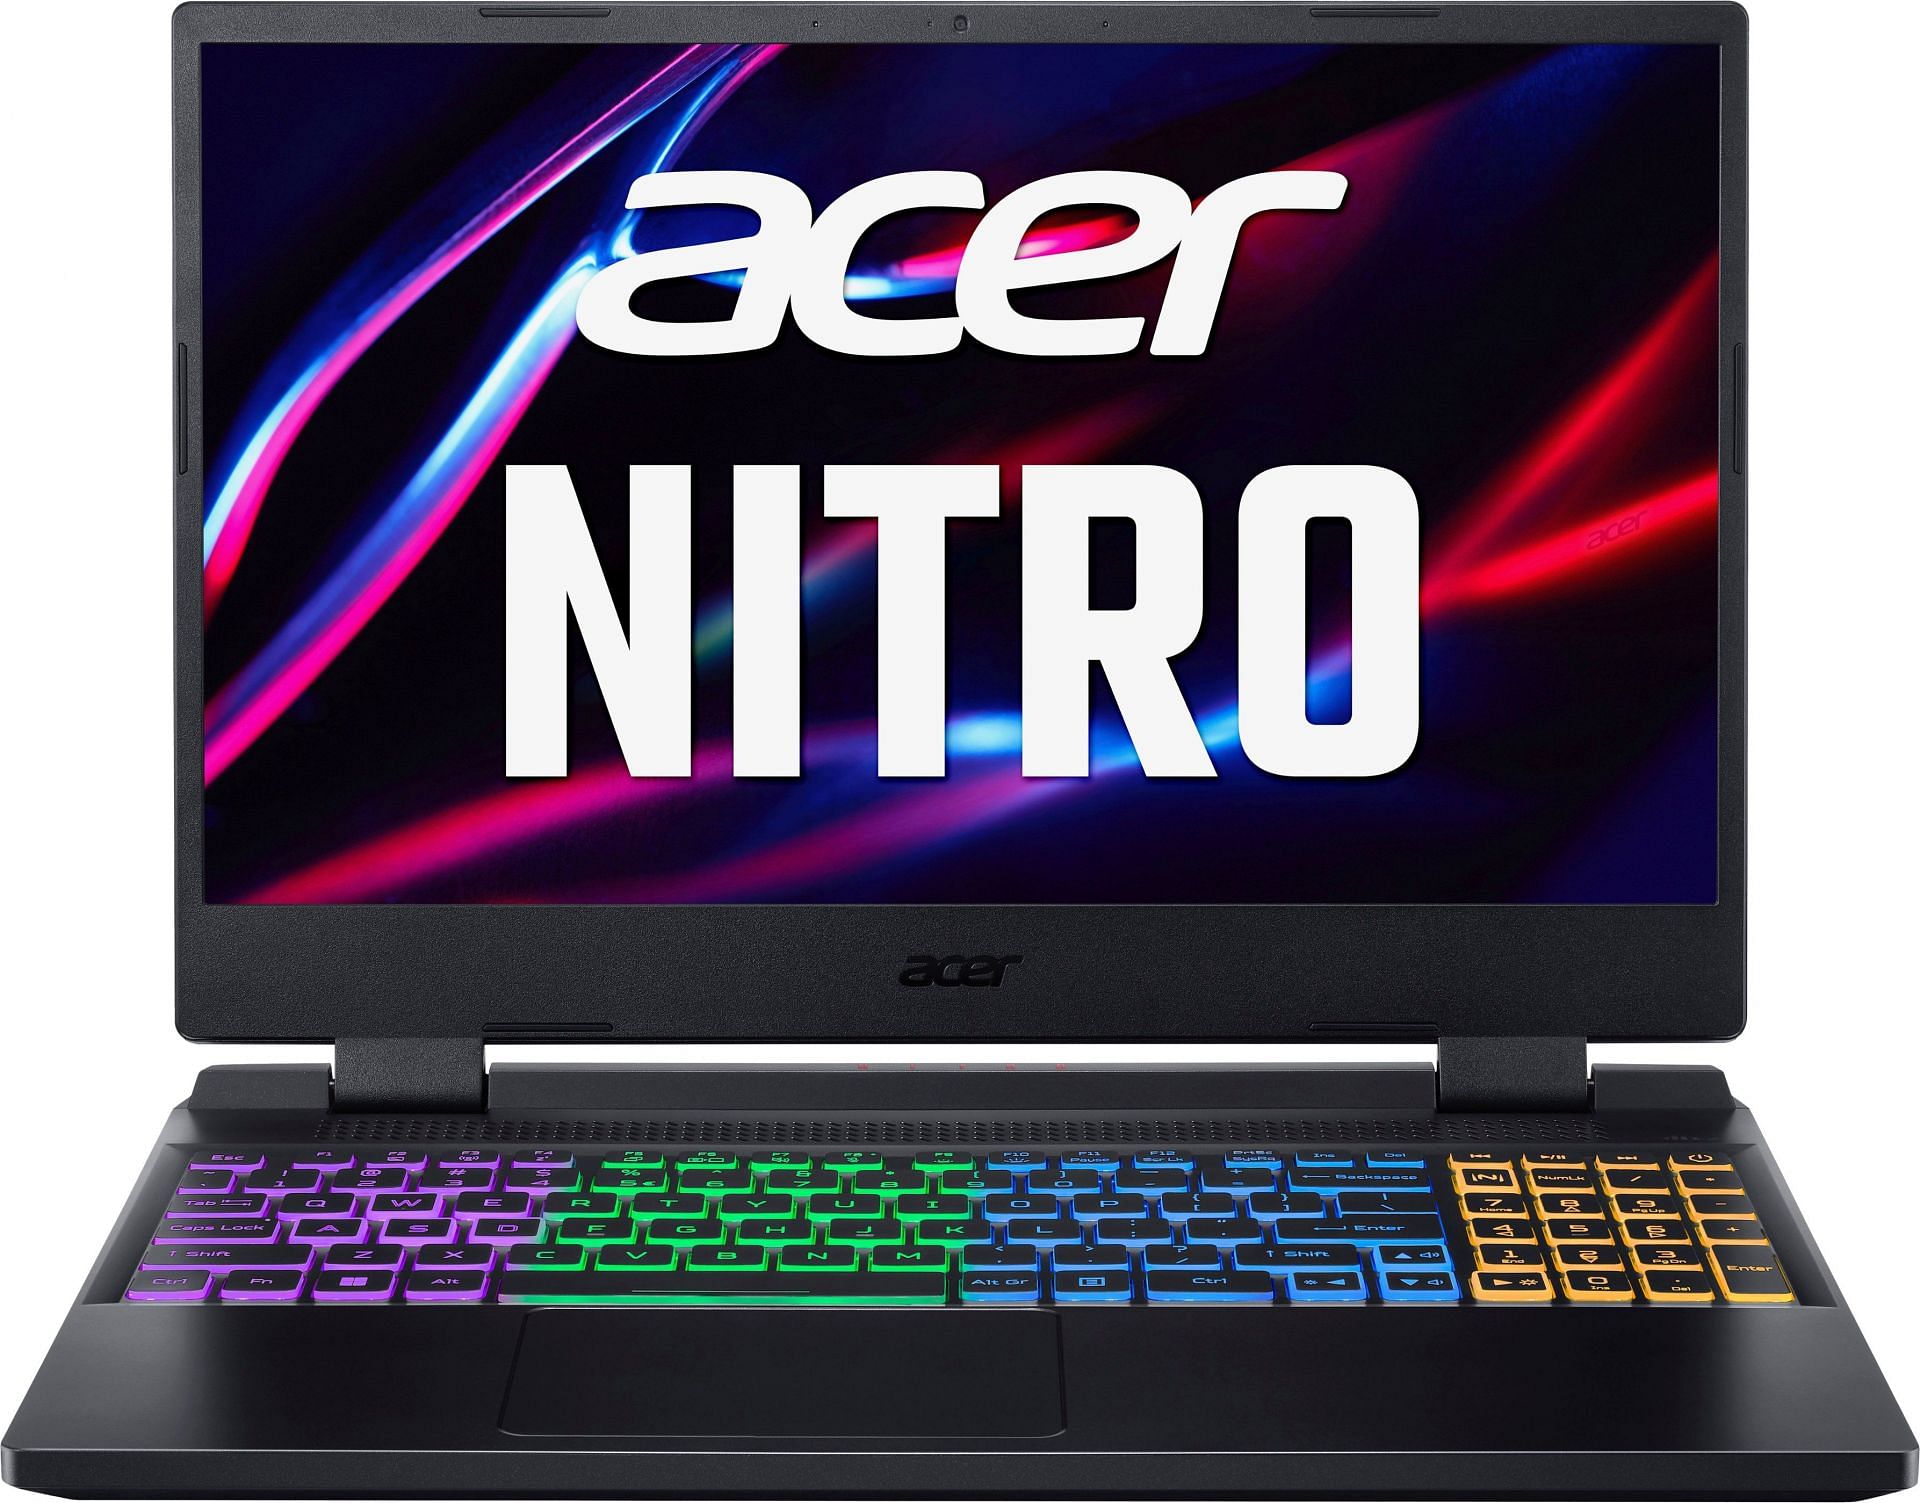 The Acer Nitro 5 15.6